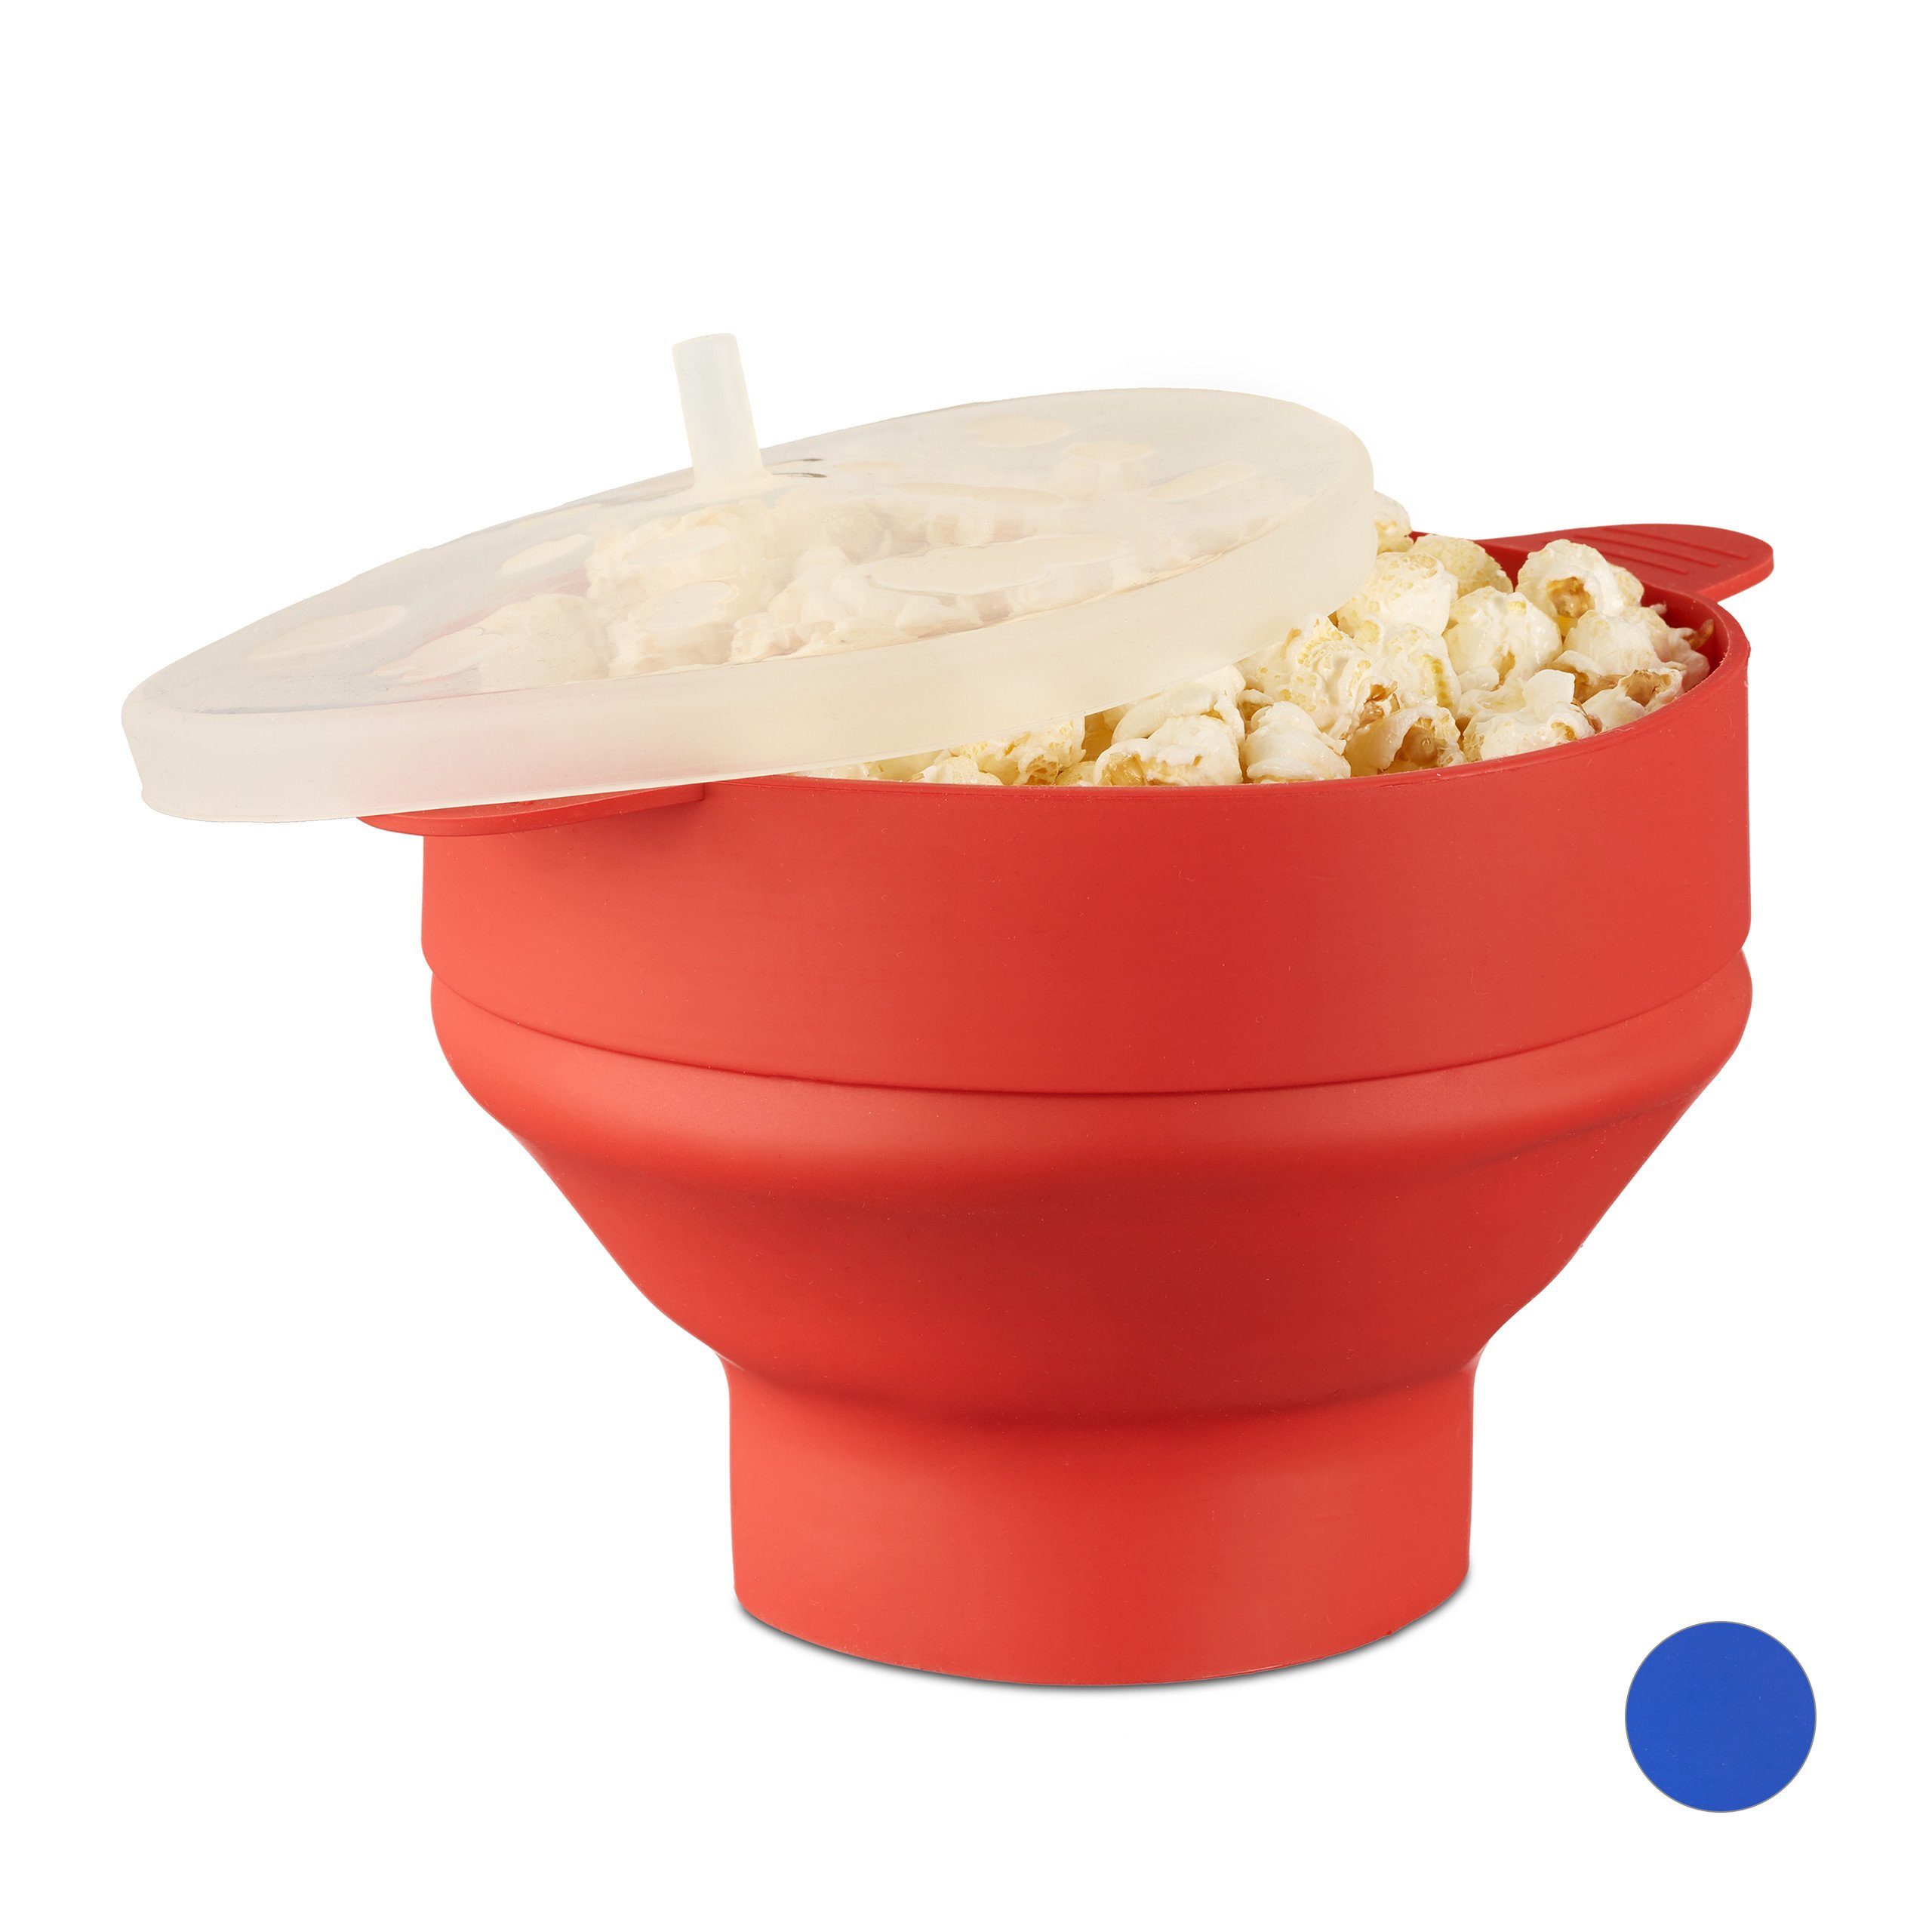 Preis ist unschlagbar relaxdays Popcorn-Pfanne 1 Mikrowelle Silikon Maker rot x Popcorn